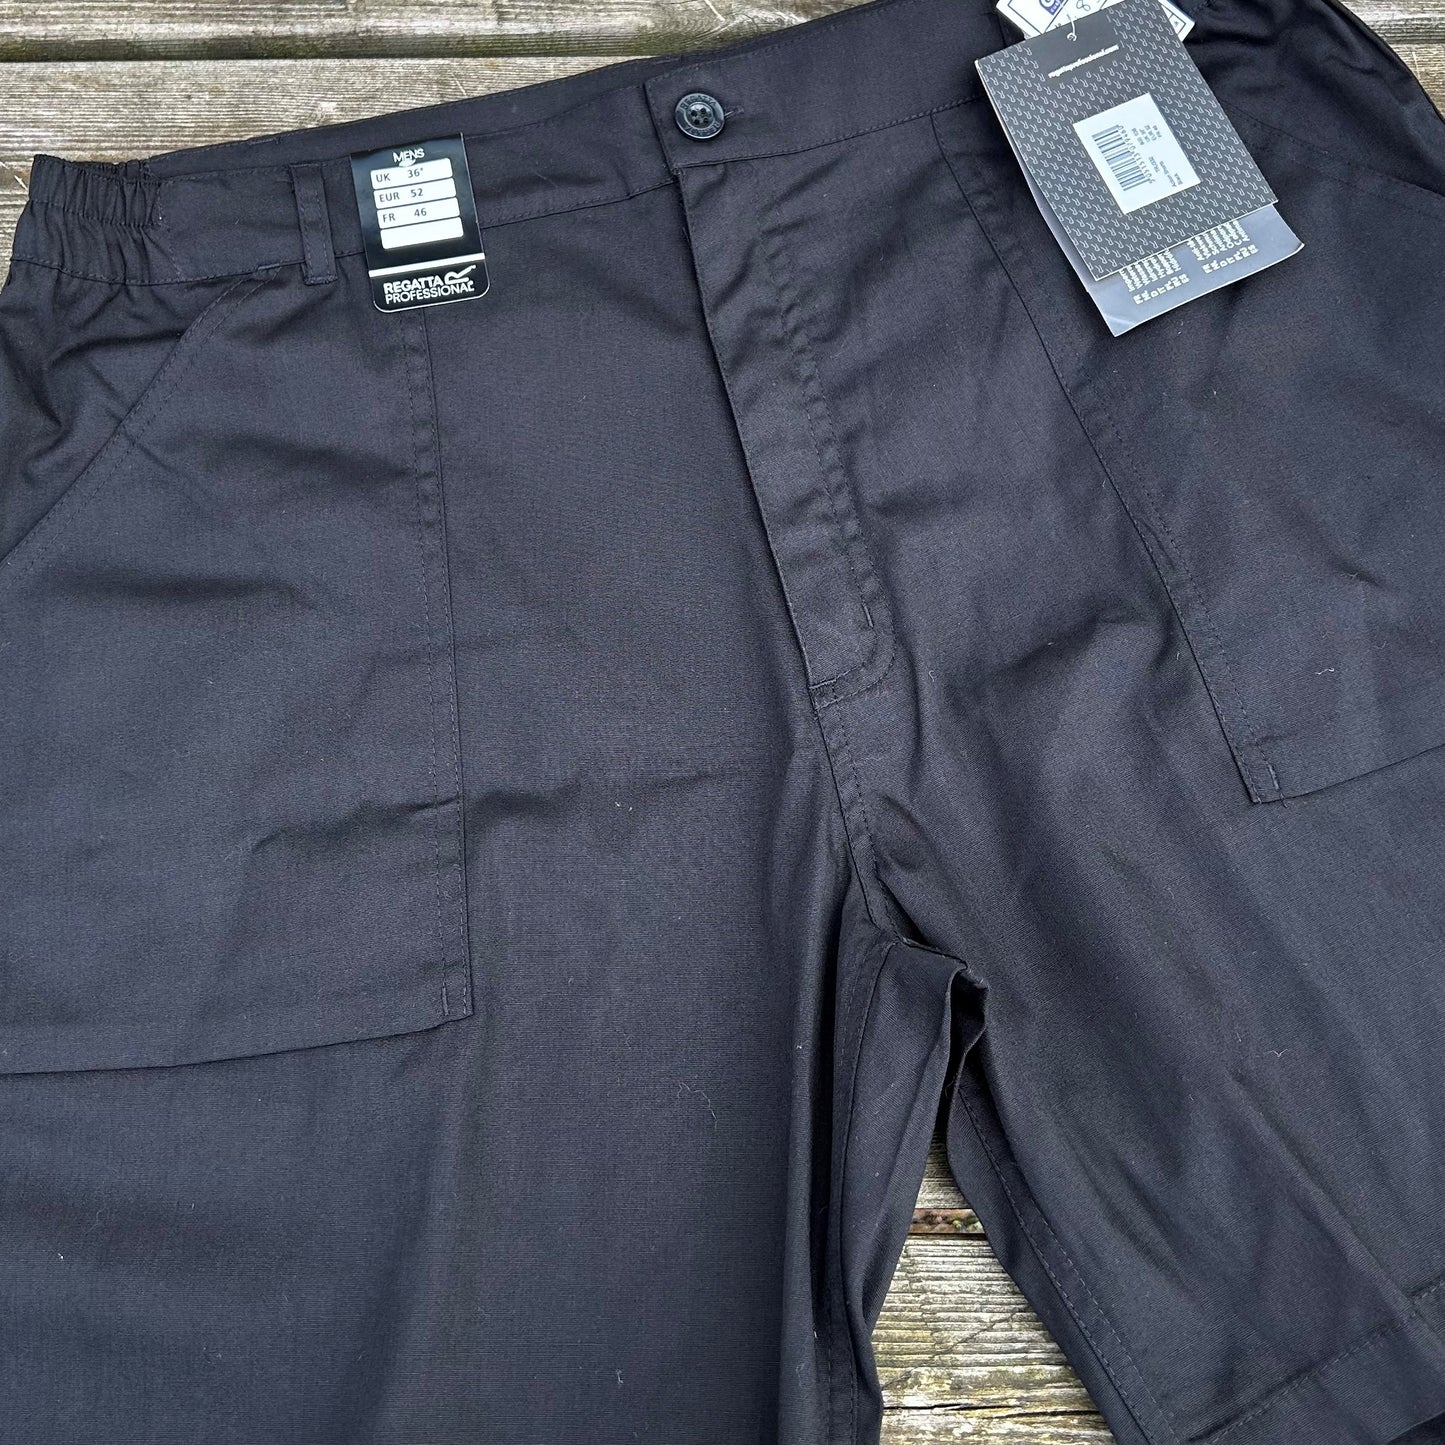 36" Black Shorts